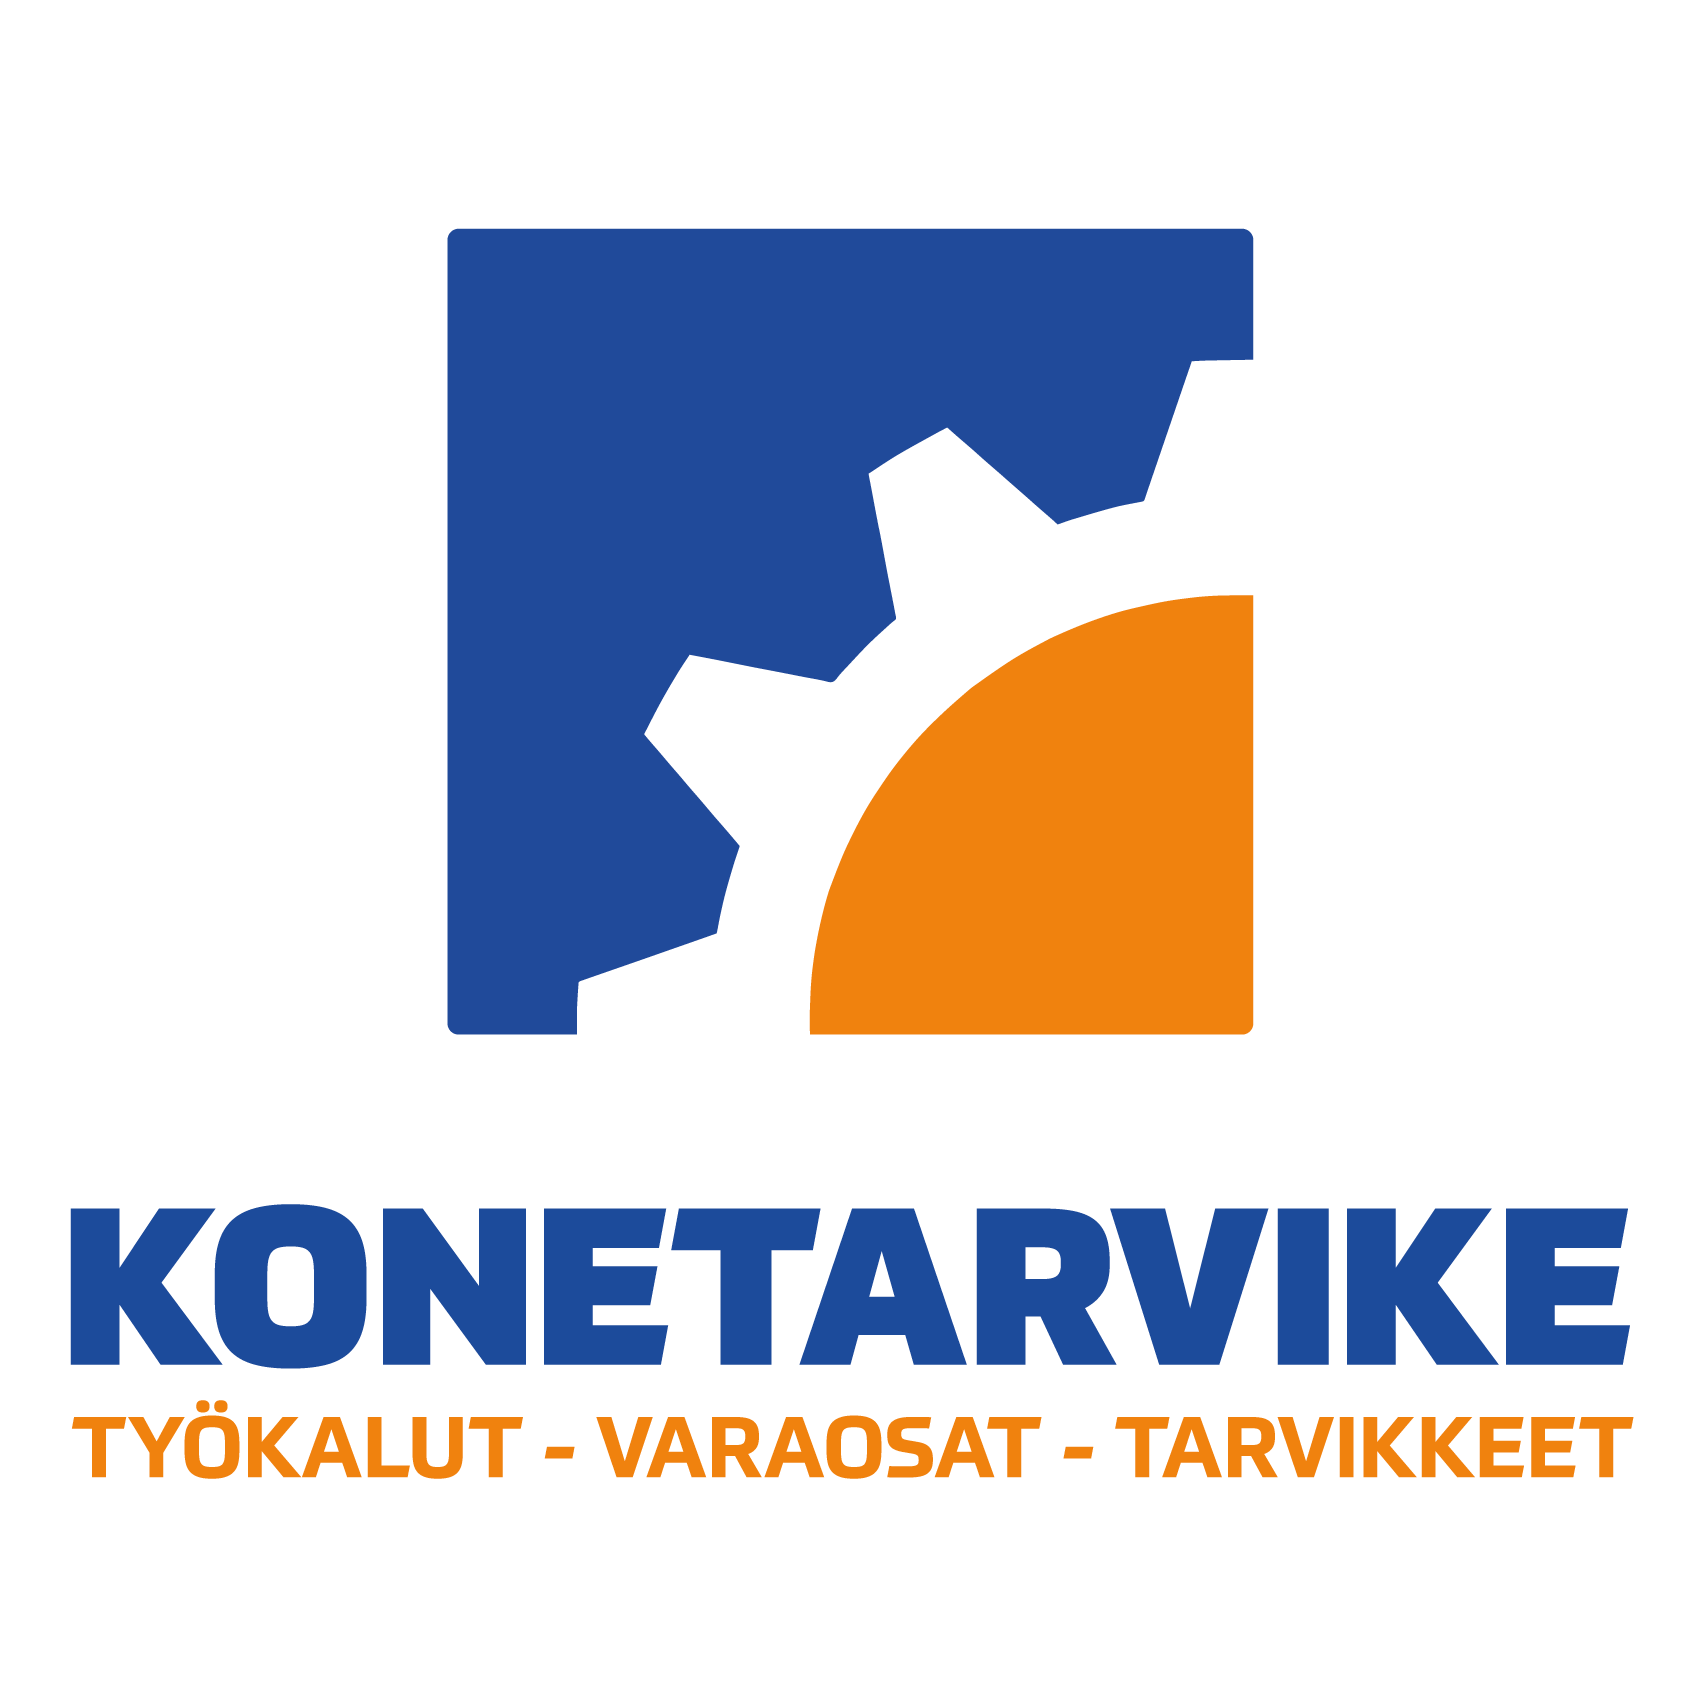 Images Vieskan Konetarvike Oy